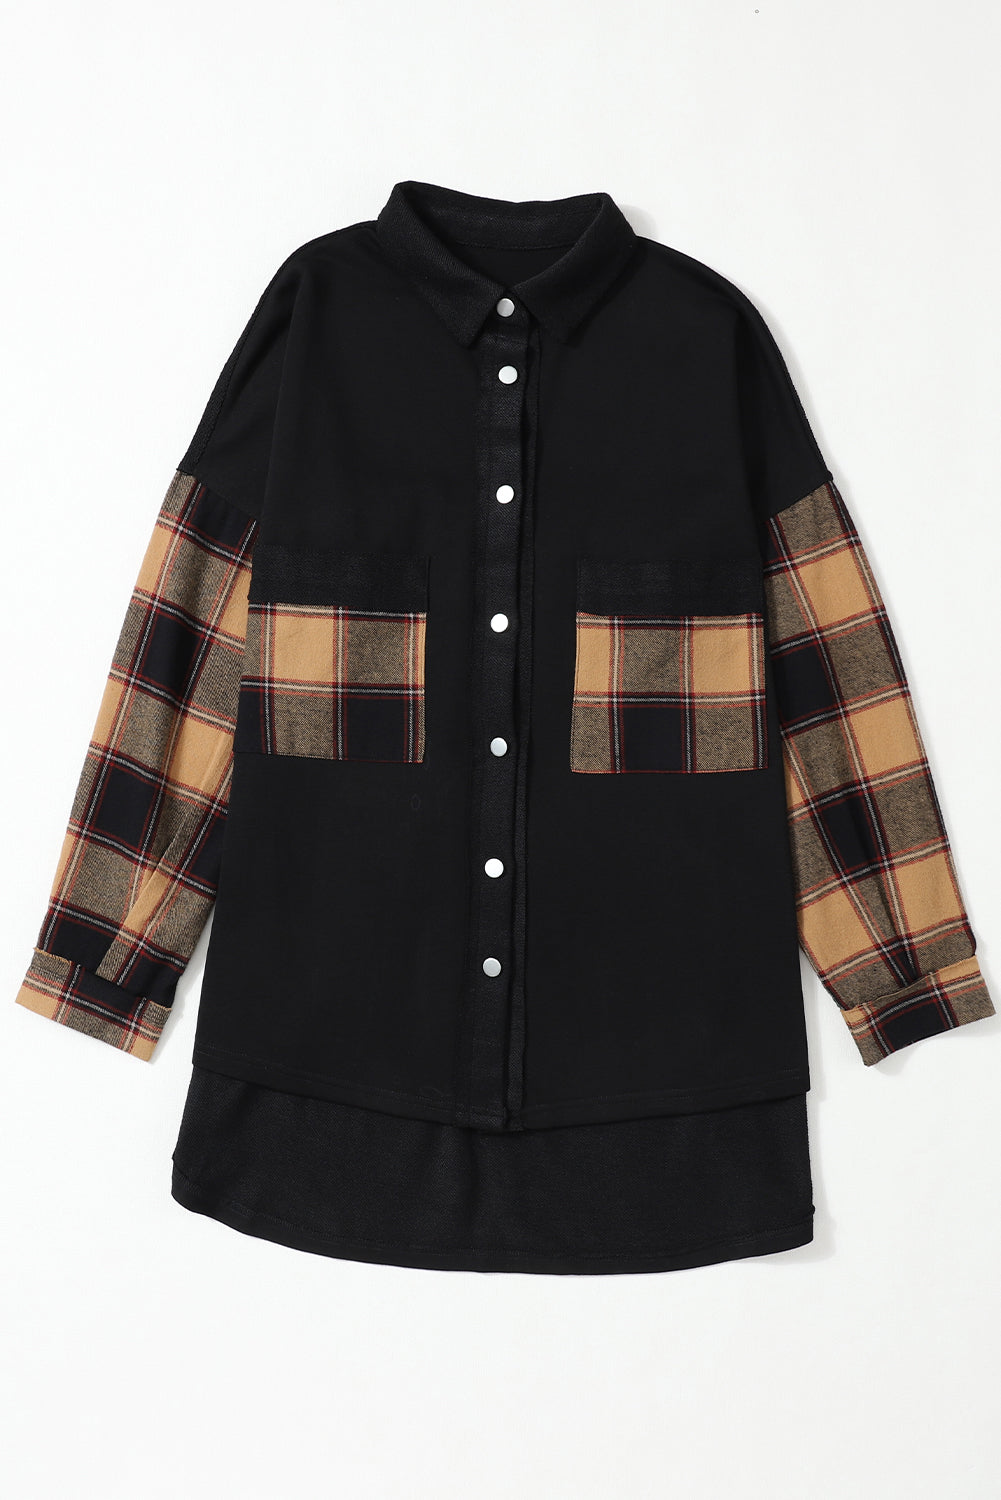 Black Plaid Patchwork Chest Pockets Oversized Shirt Jacket